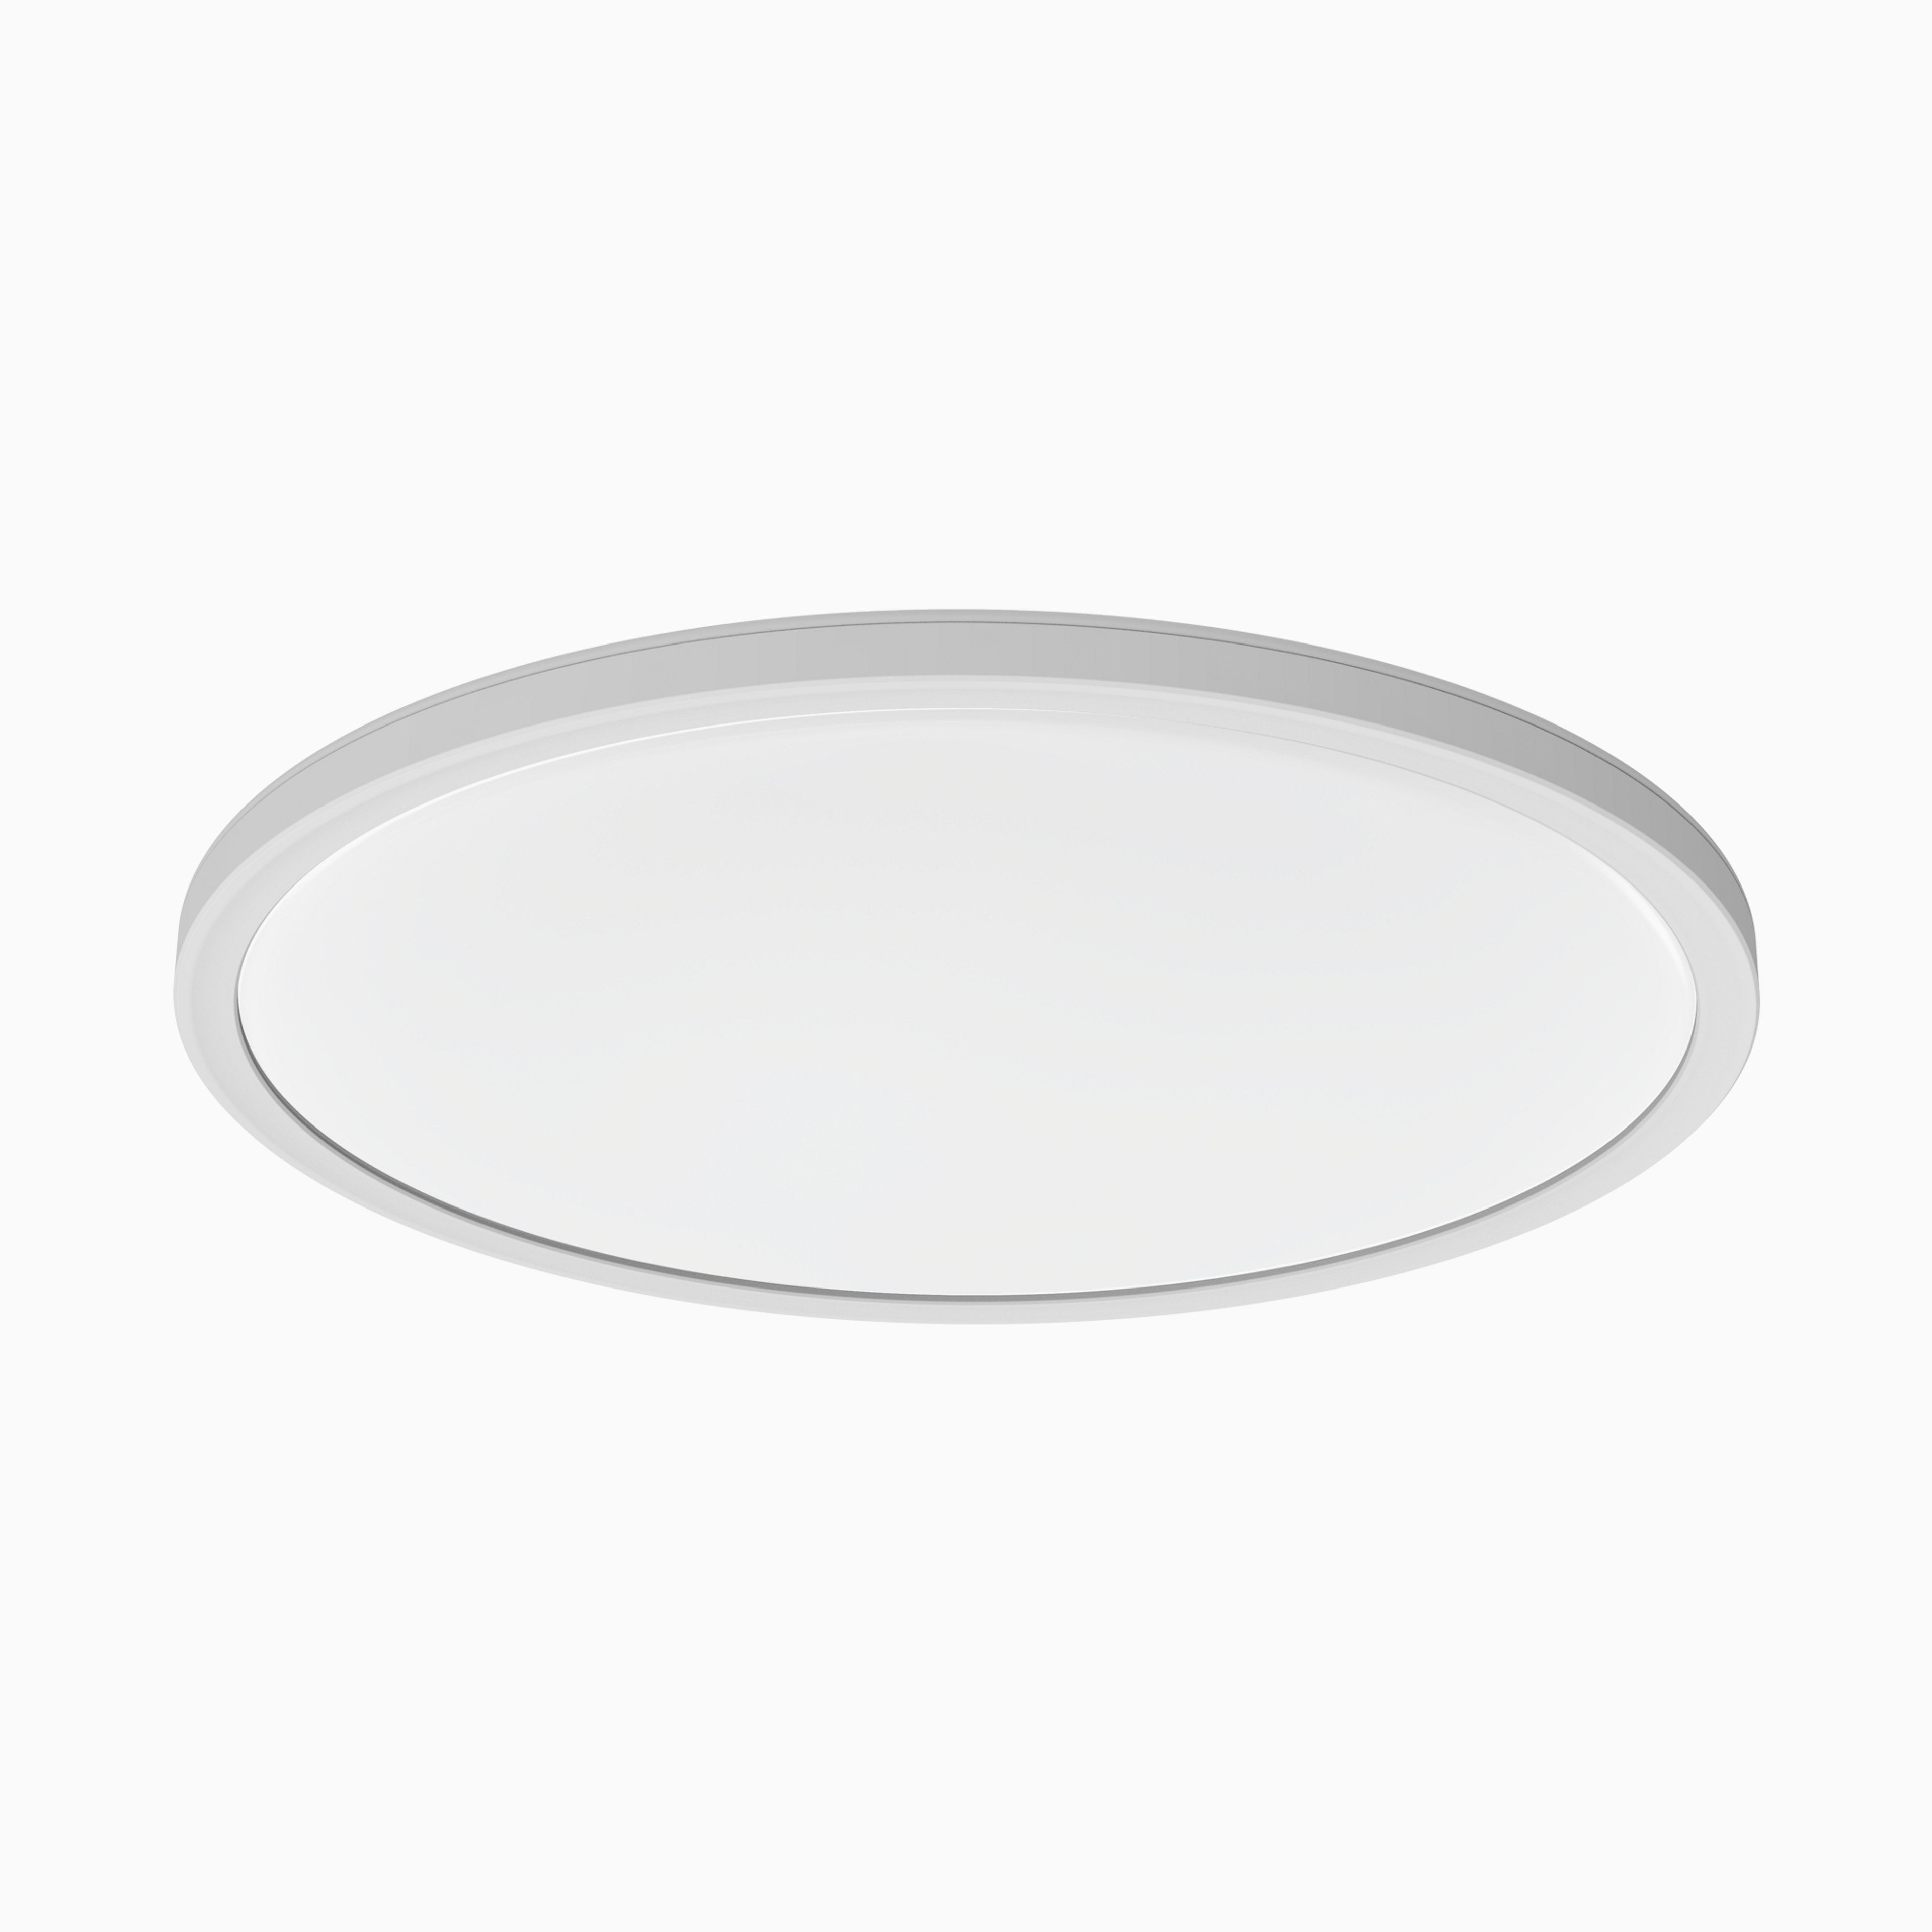 KODA Slim 15" LED Ceiling Light with Adjustable Color